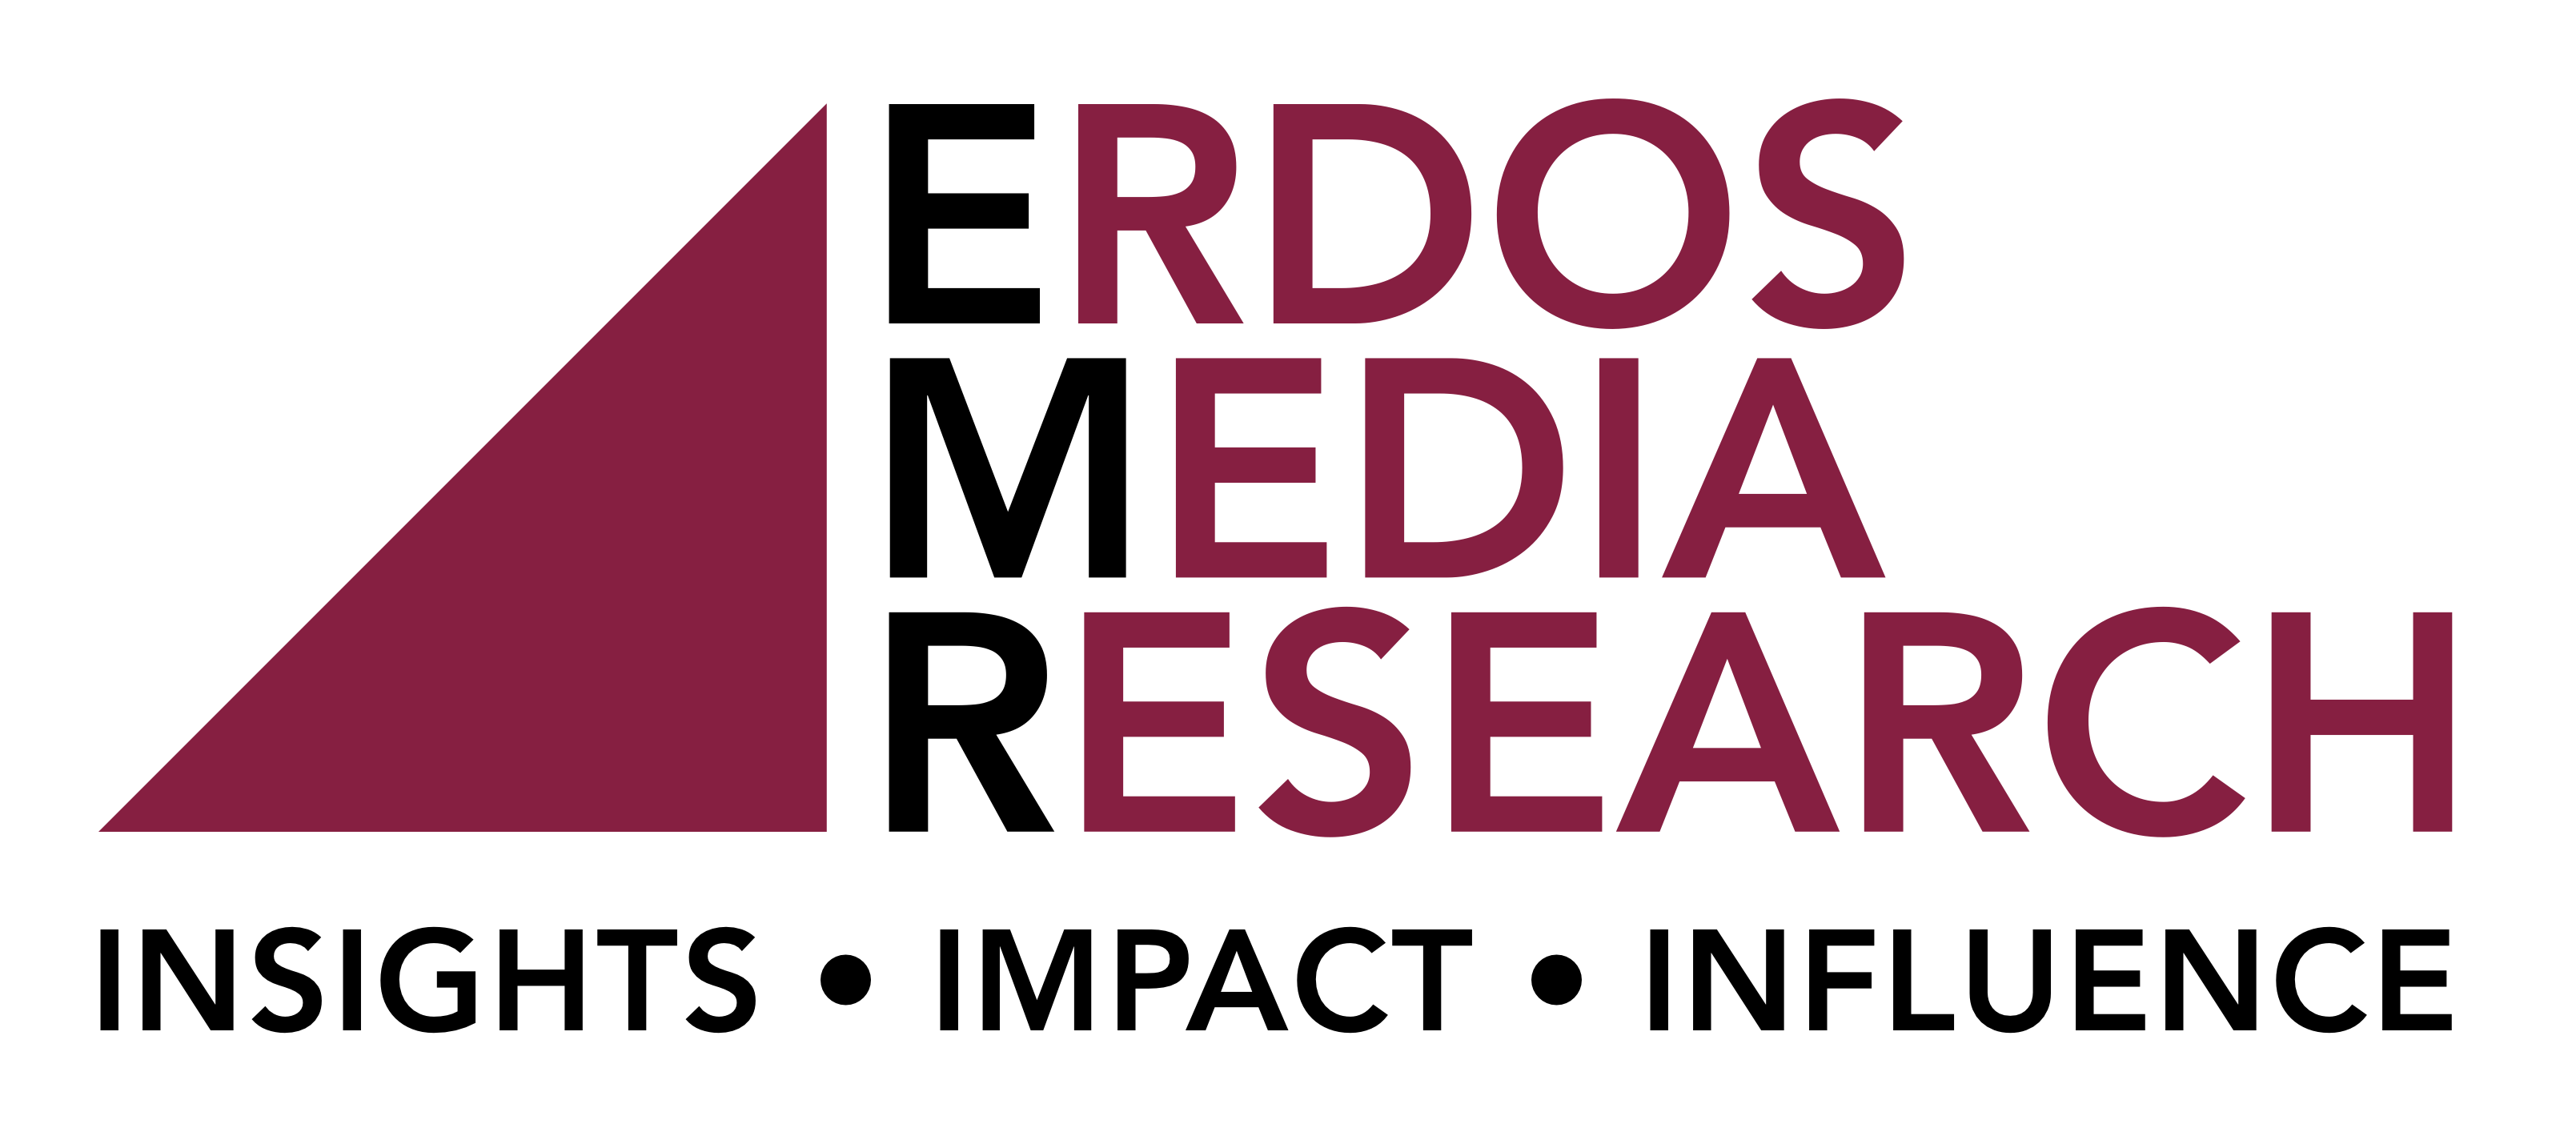 erdos media research logo